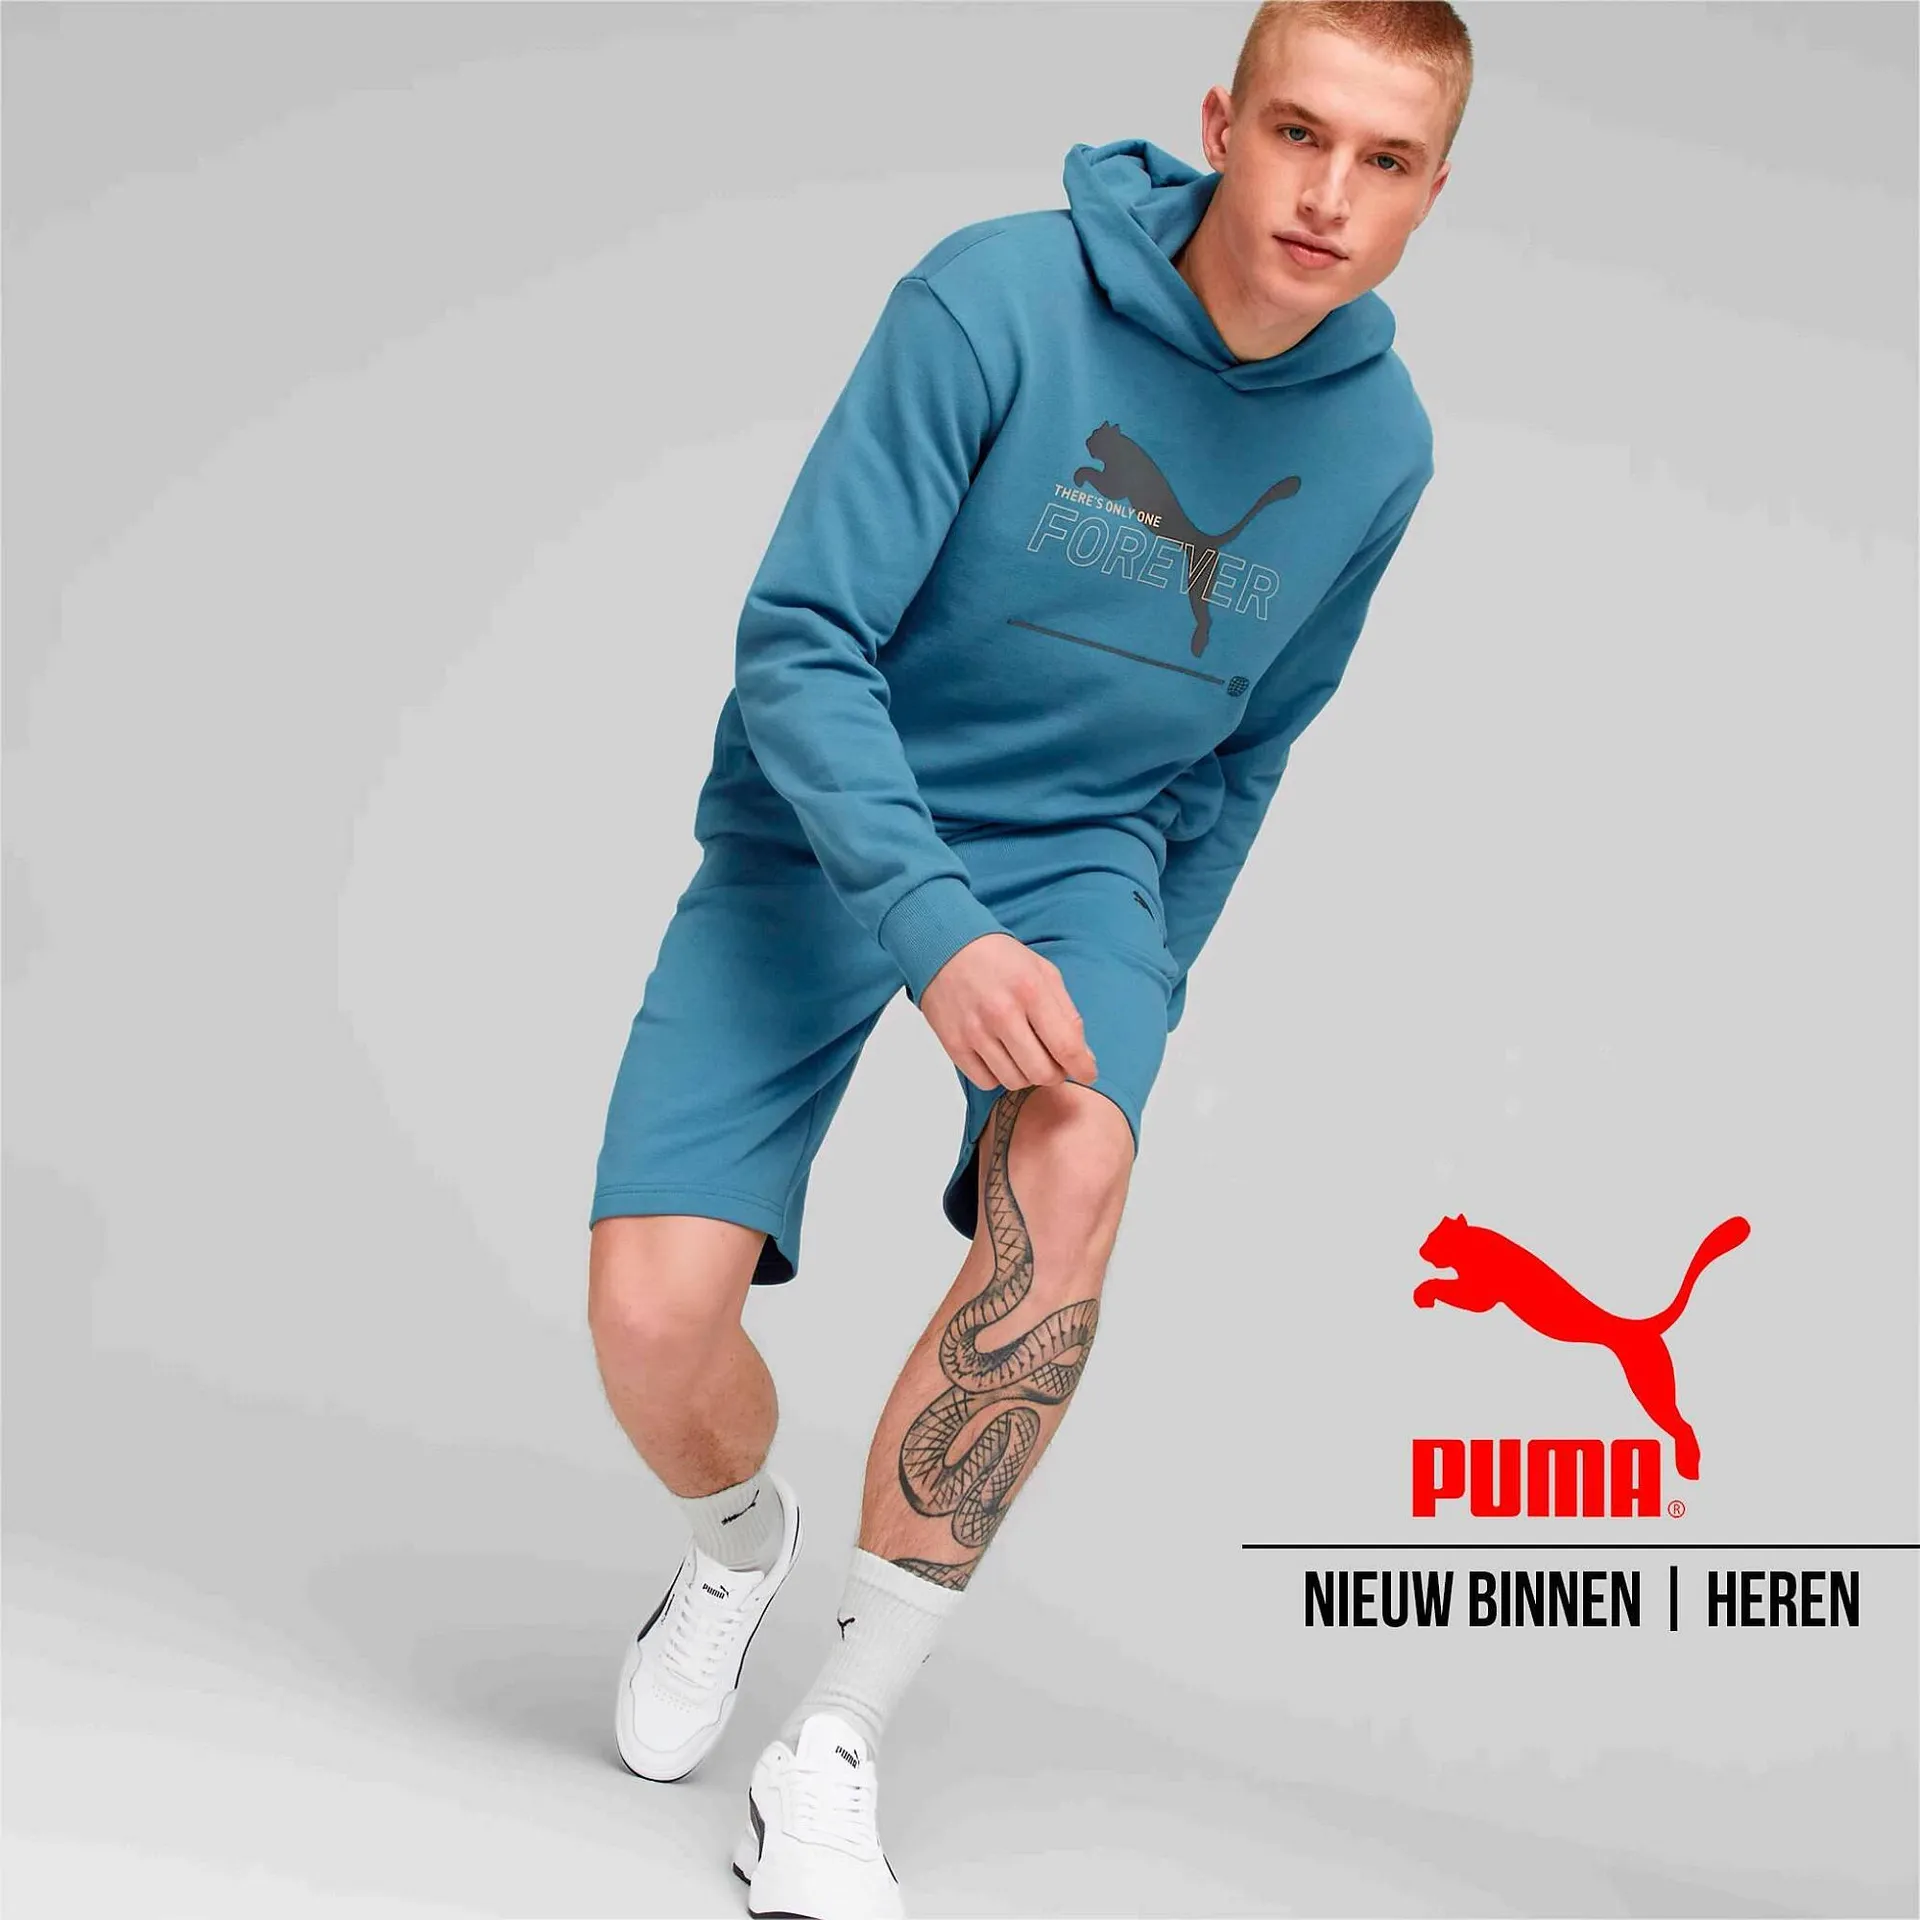 Puma folder - 1